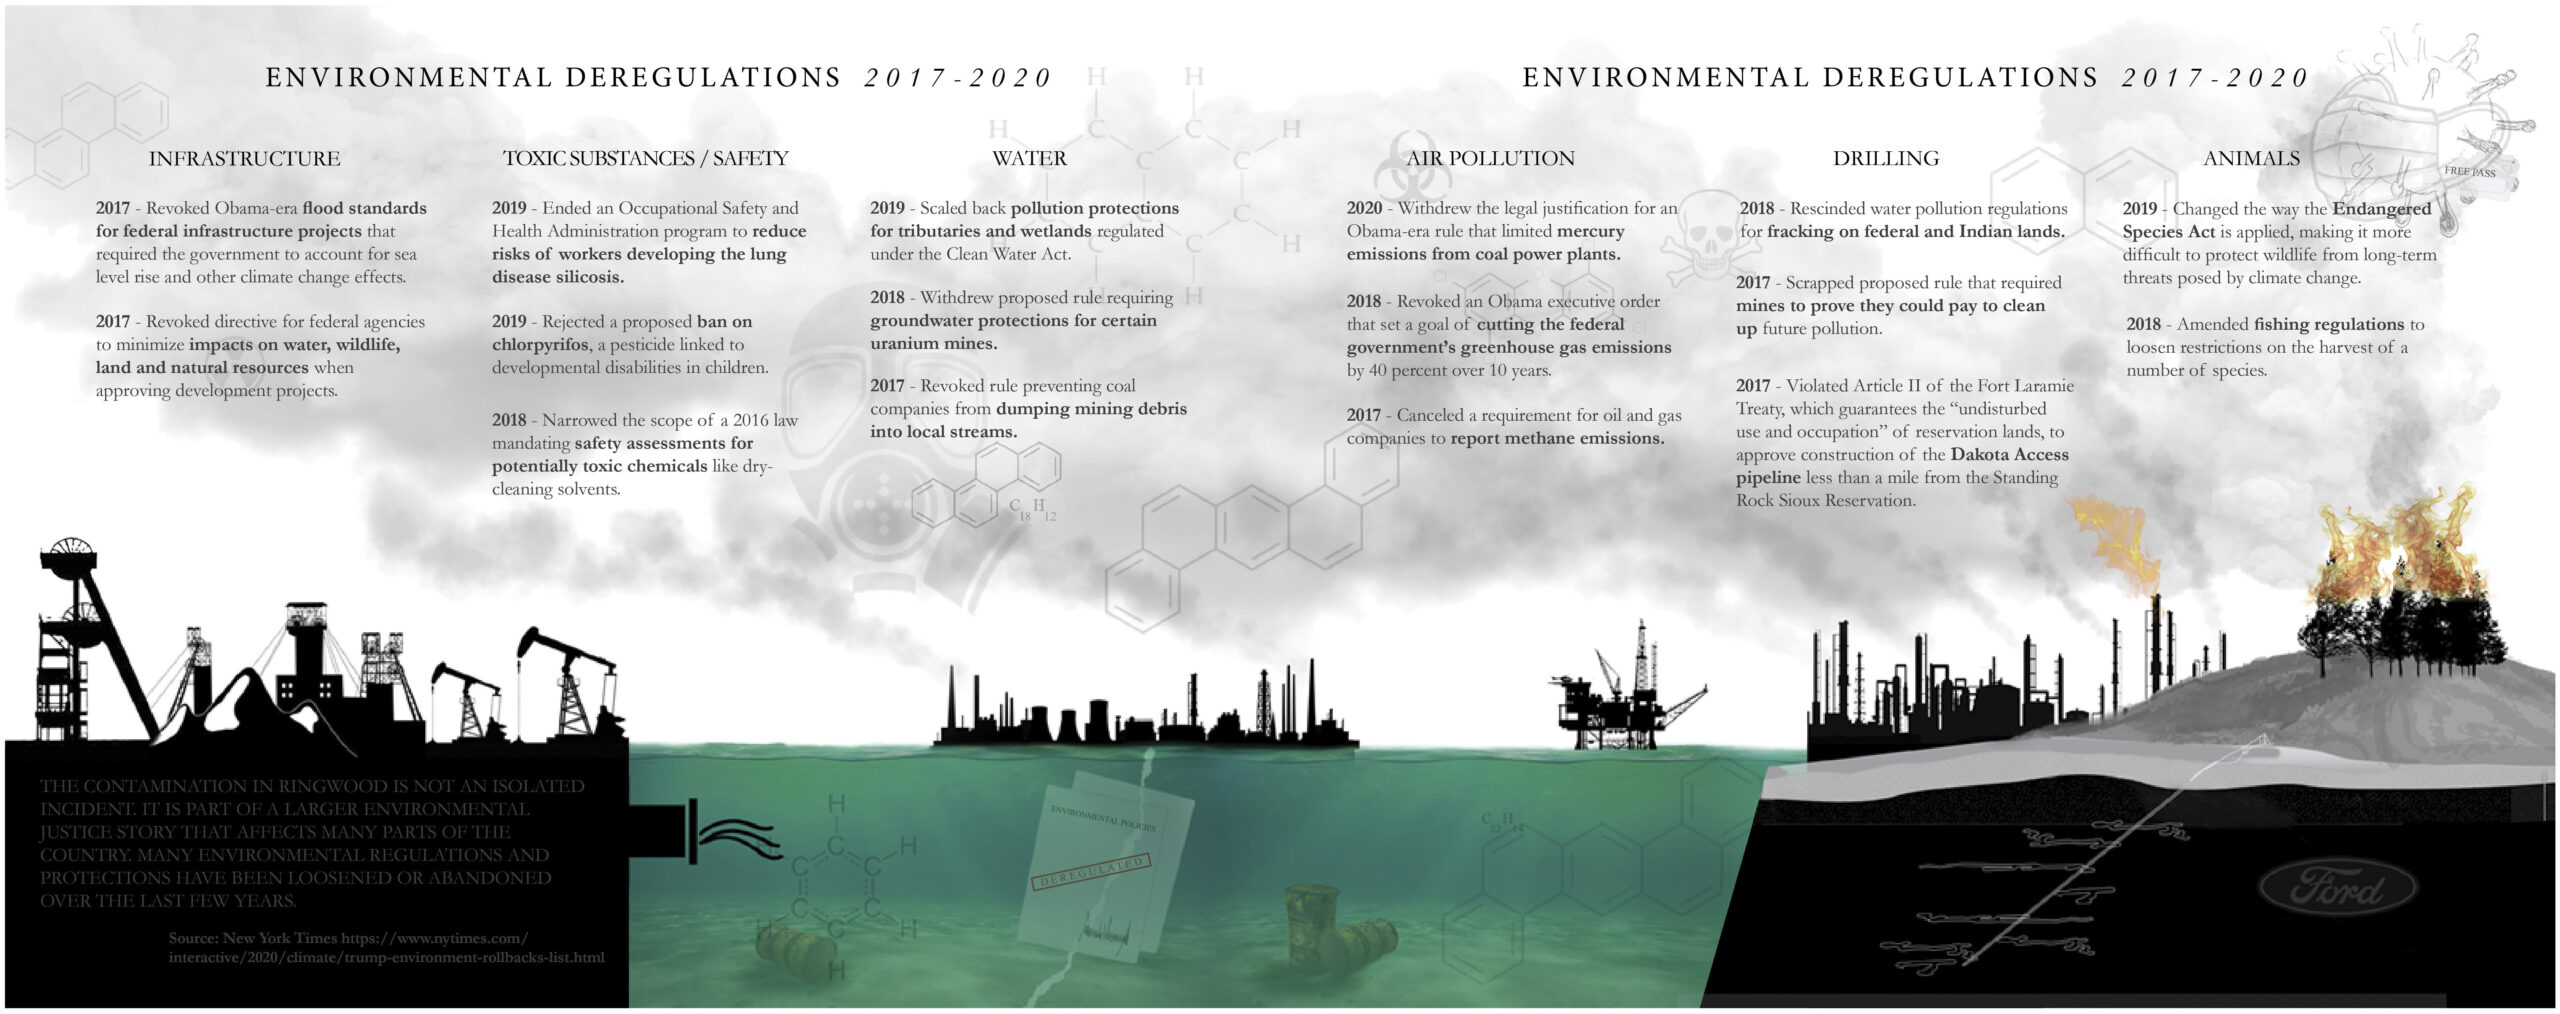 Infographic of environmental deregulation